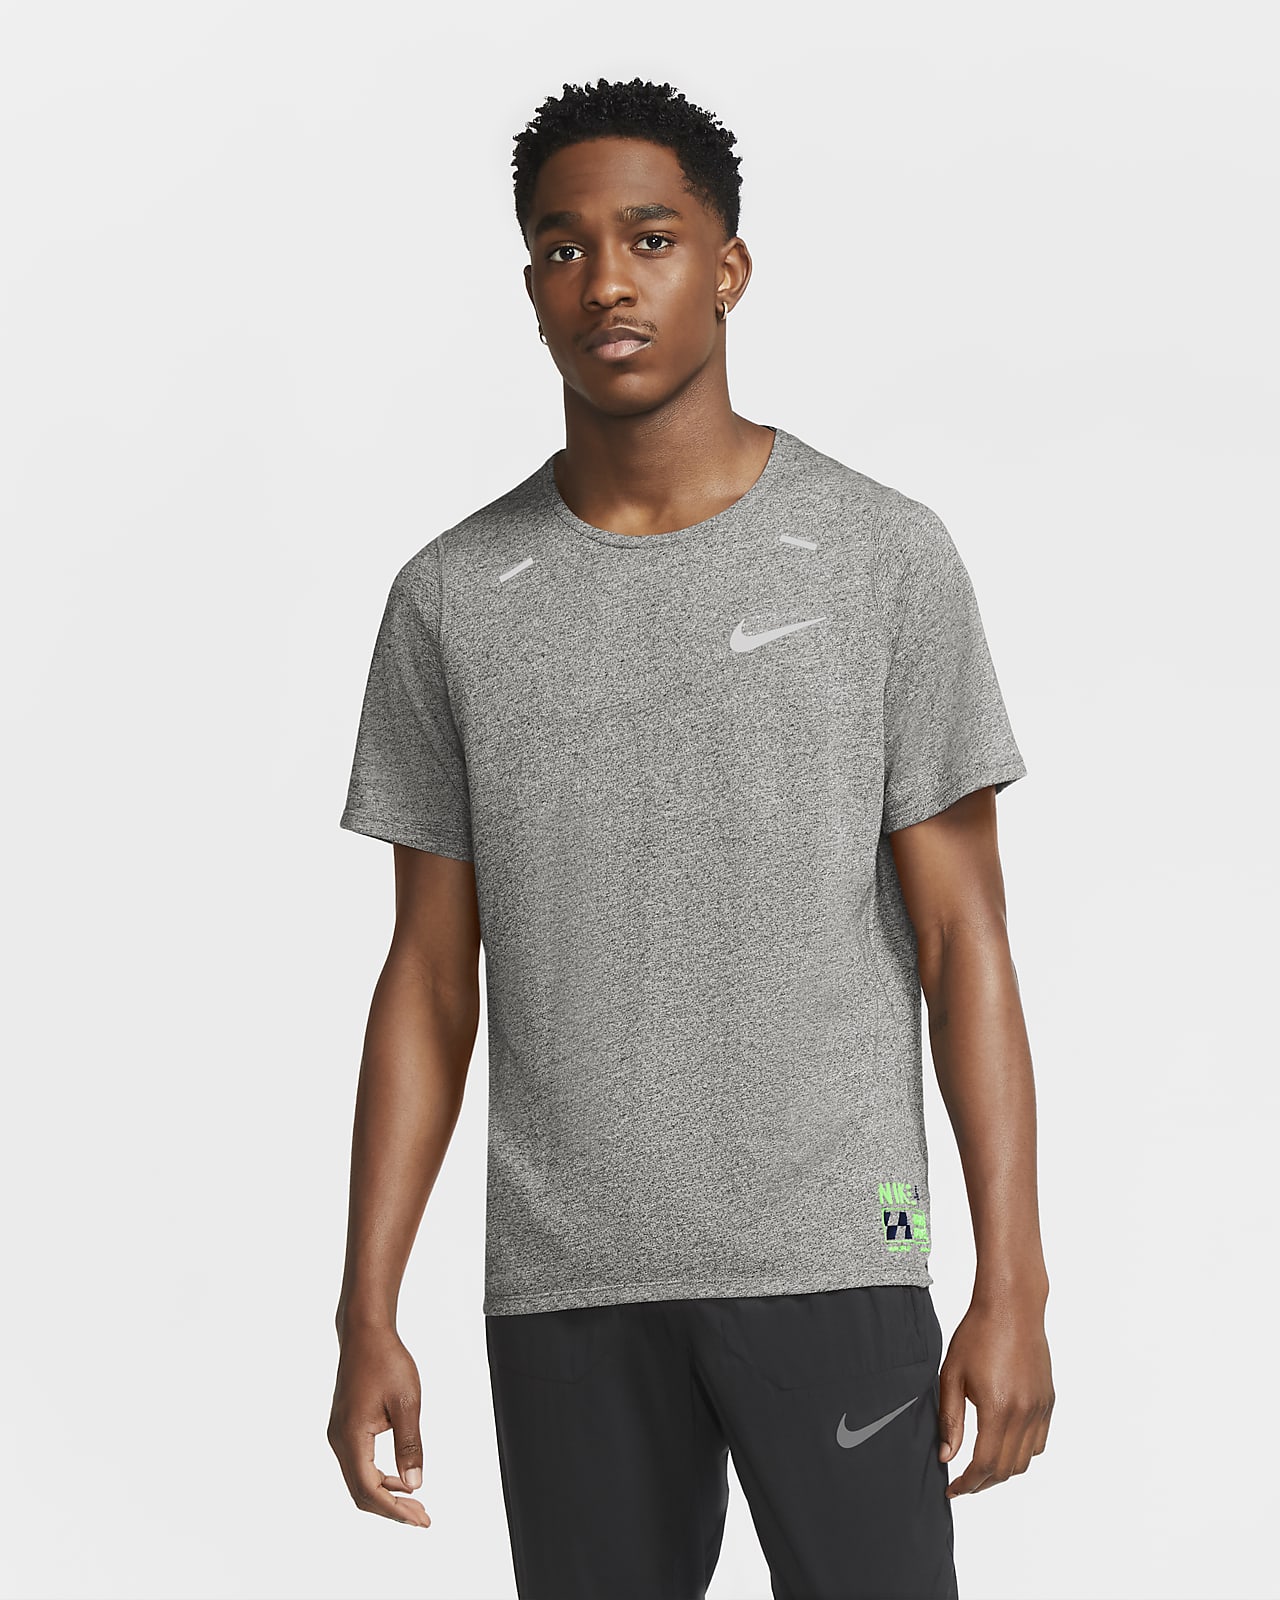 Nike Rise 365 Future Fast Men's Running 